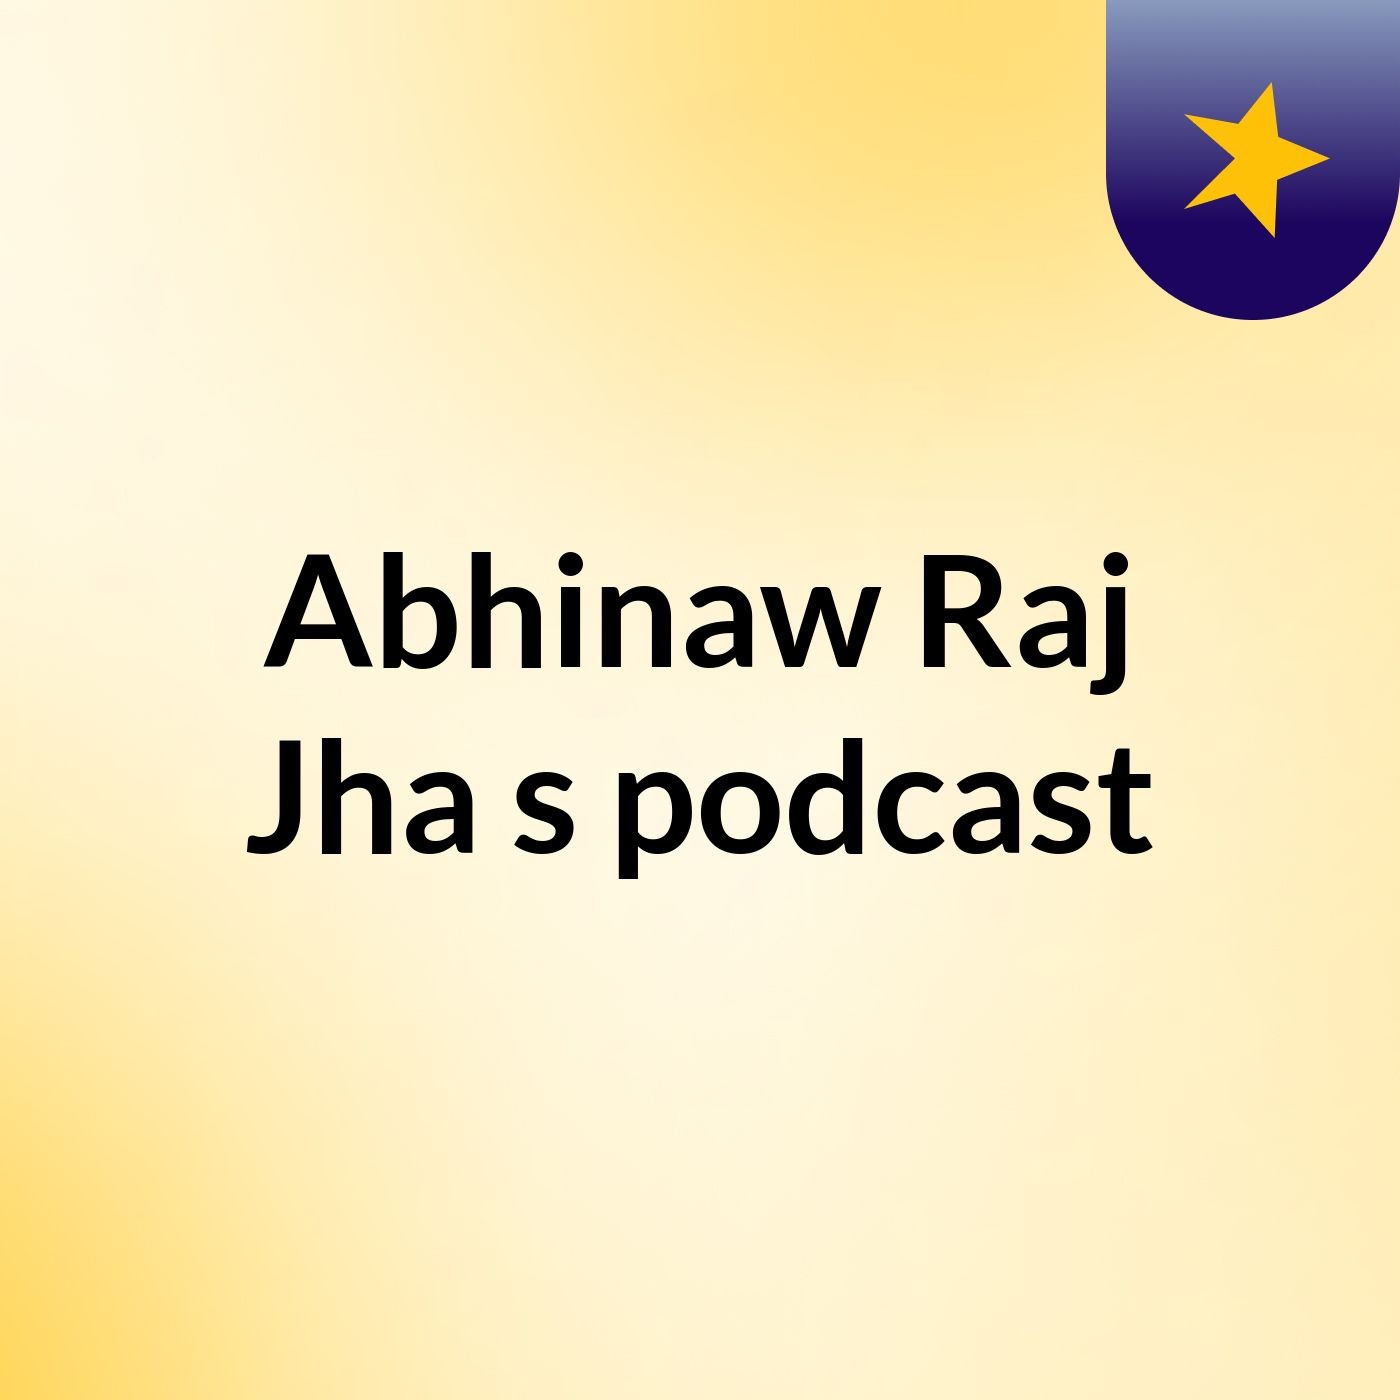 Episode 8 - Abhinaw Raj Jha's podcast